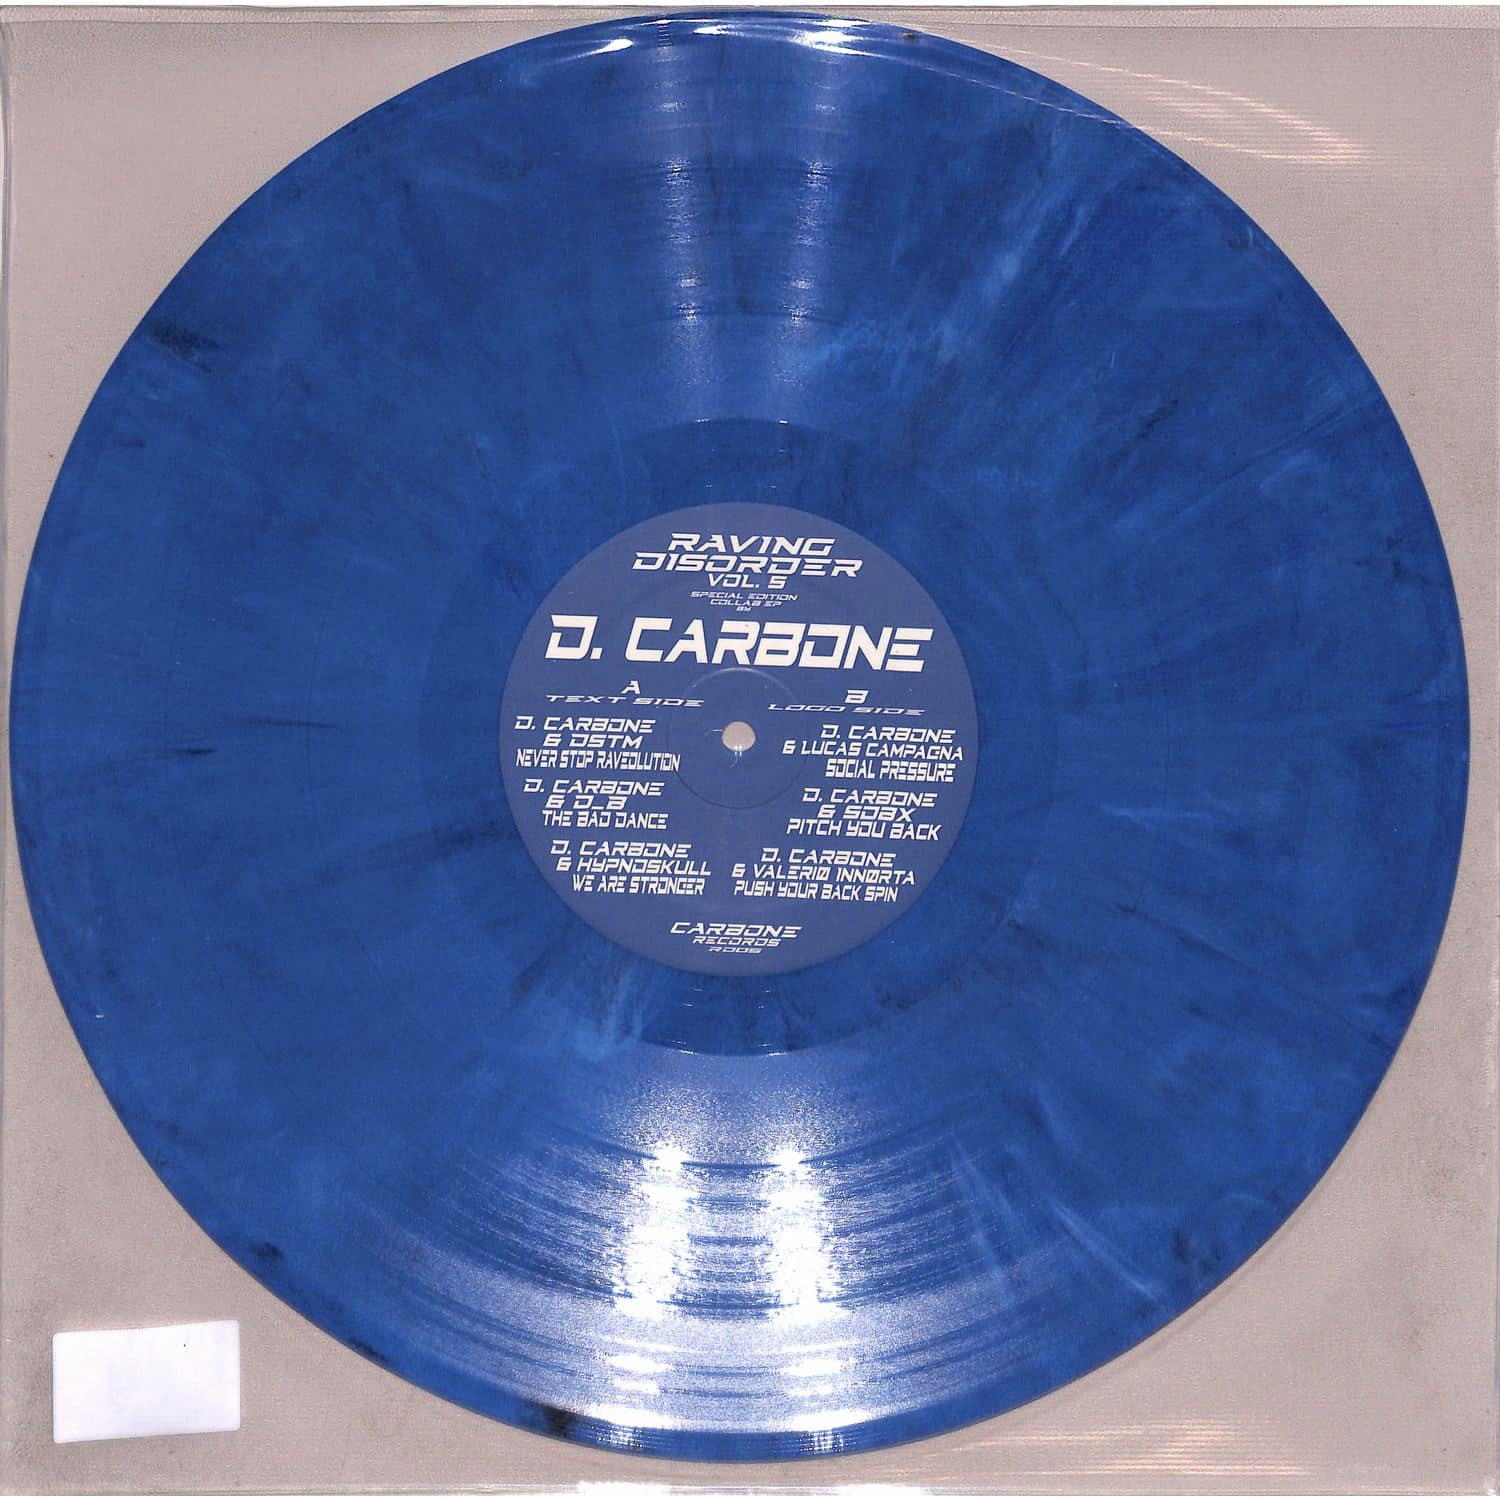 D. Carbone - RAVING DISORDER VOL. 5 